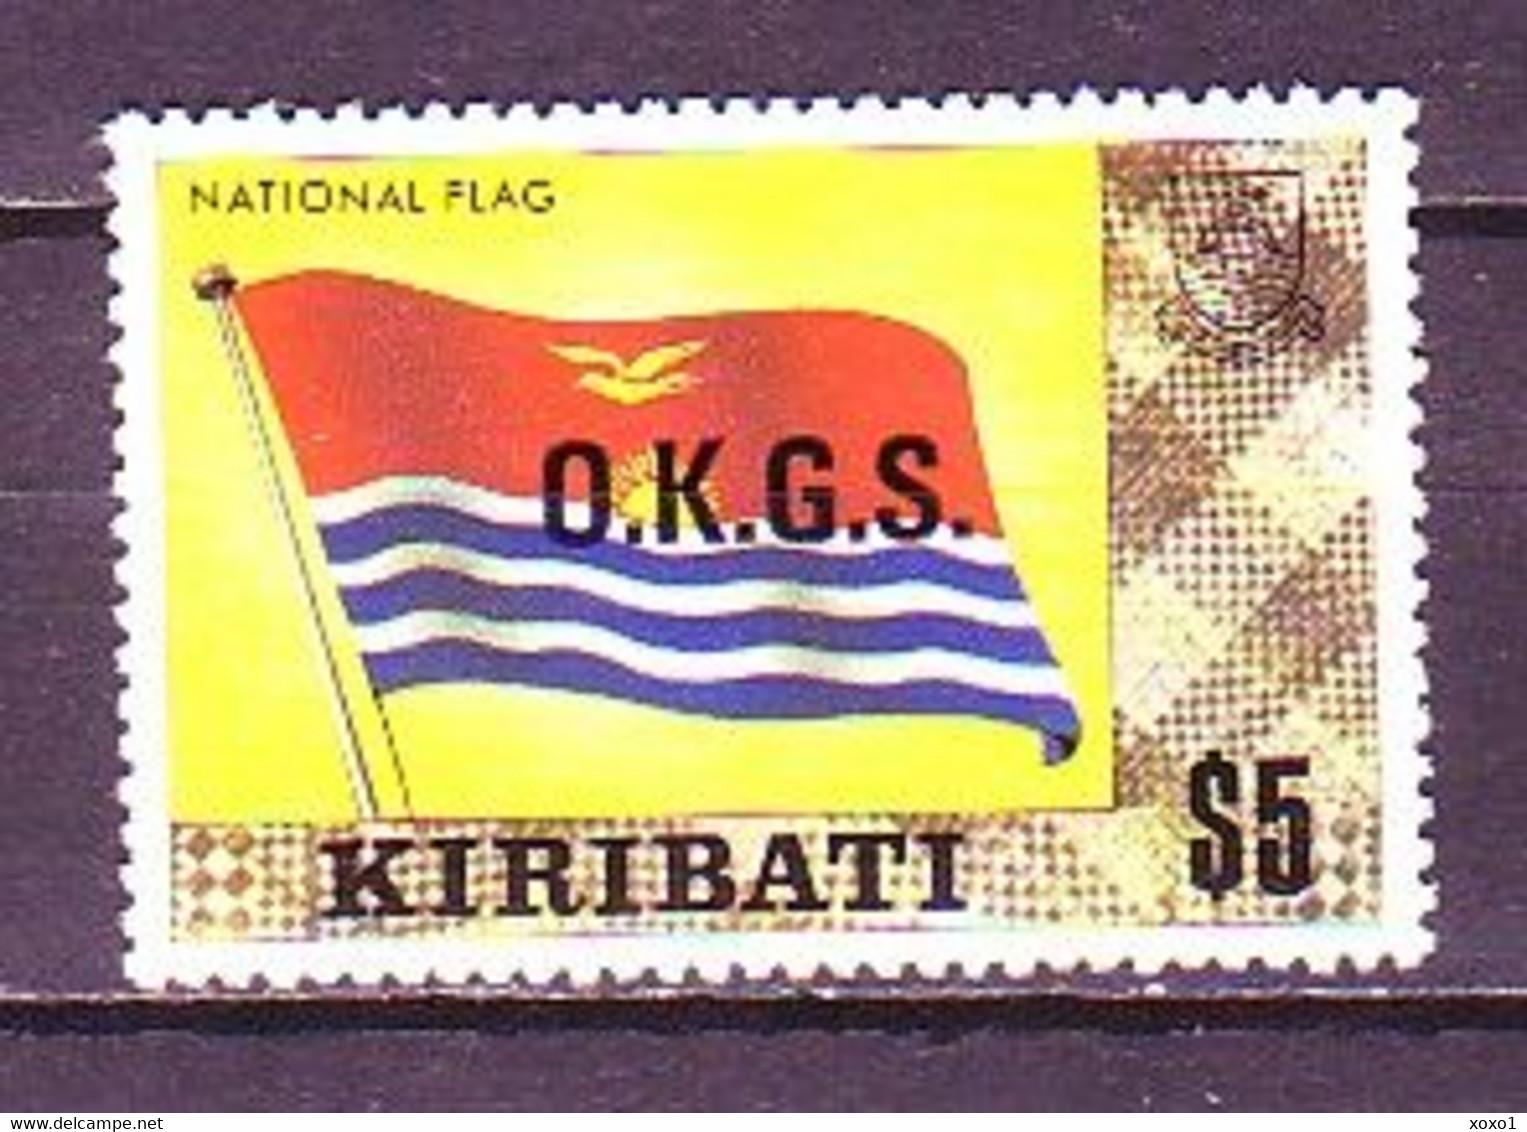 Kiribati 1981 MiNr. 15x Freimarken National Flag OKGS Official Stamps 1v MNH**  5,00 € - Kiribati (1979-...)